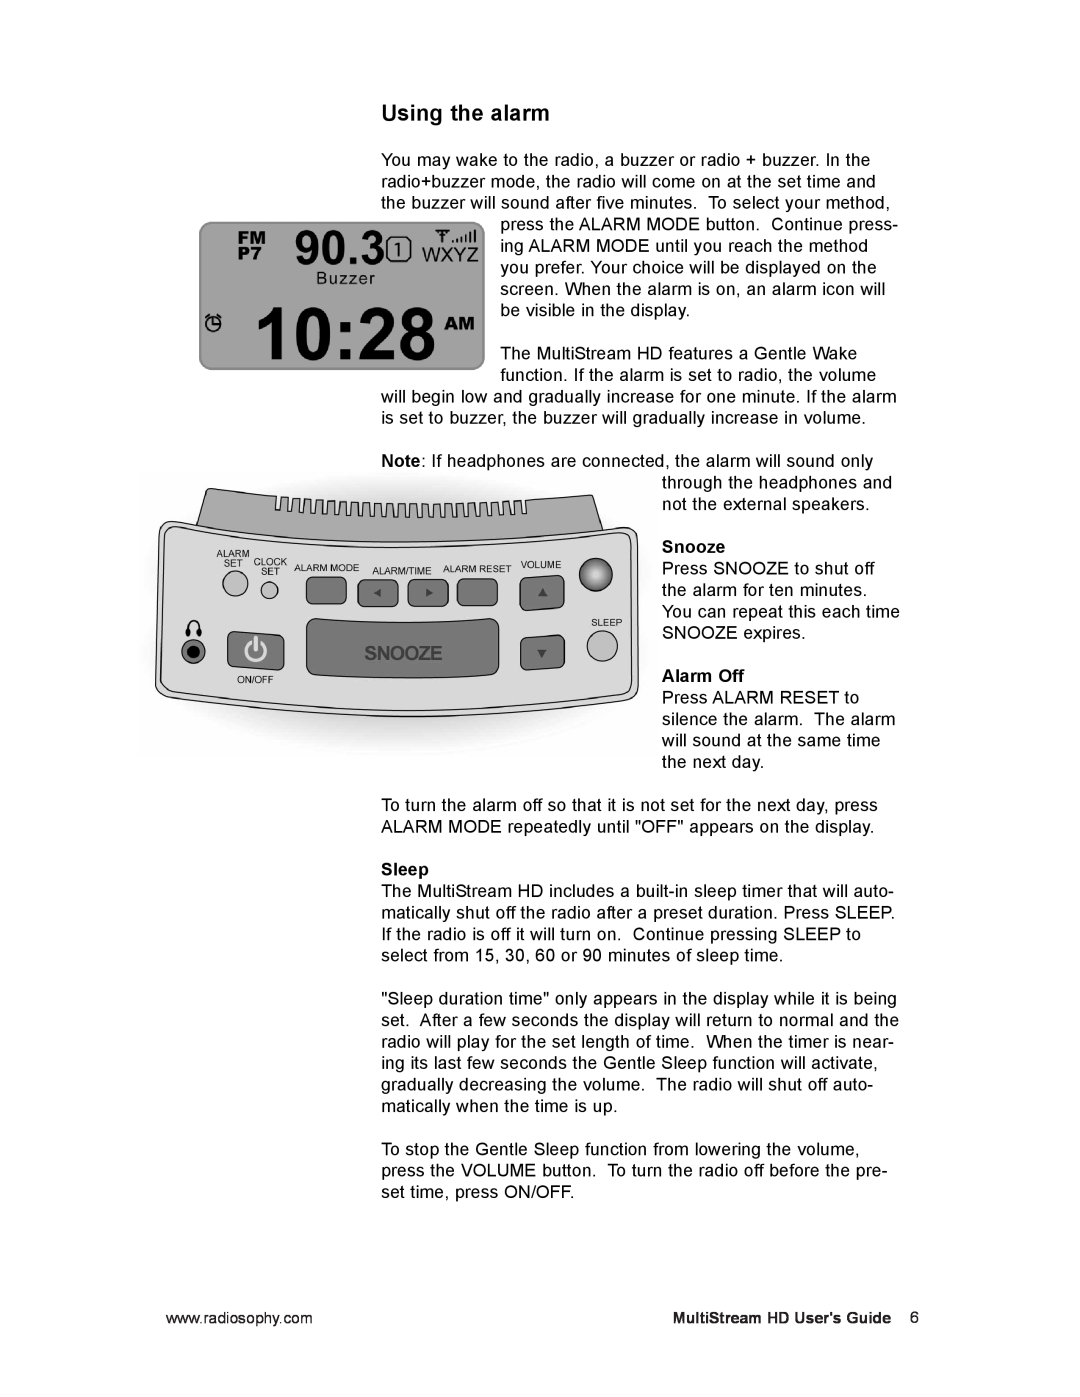 RCA MPA0001 manual Using the alarm, Snooze, Alarm Off, Sleep 